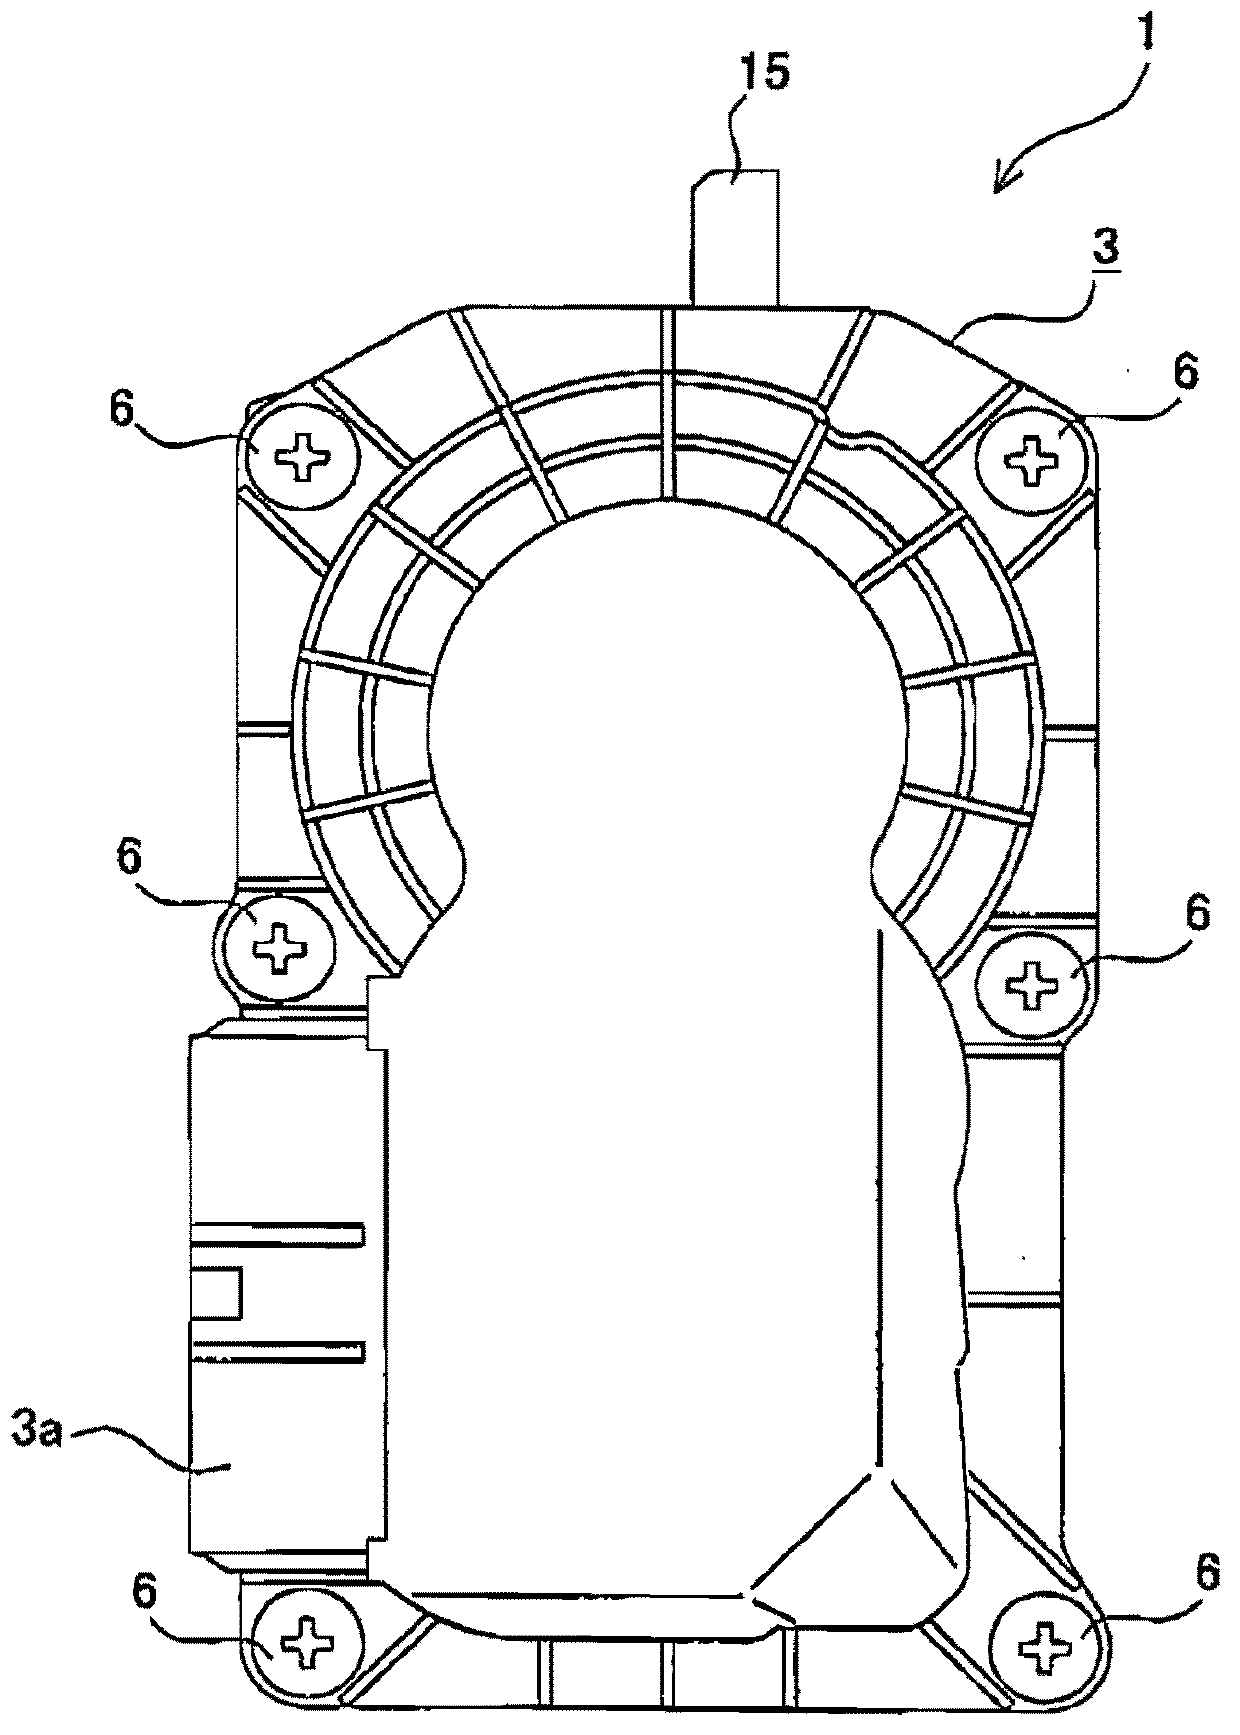 Throttle valve device